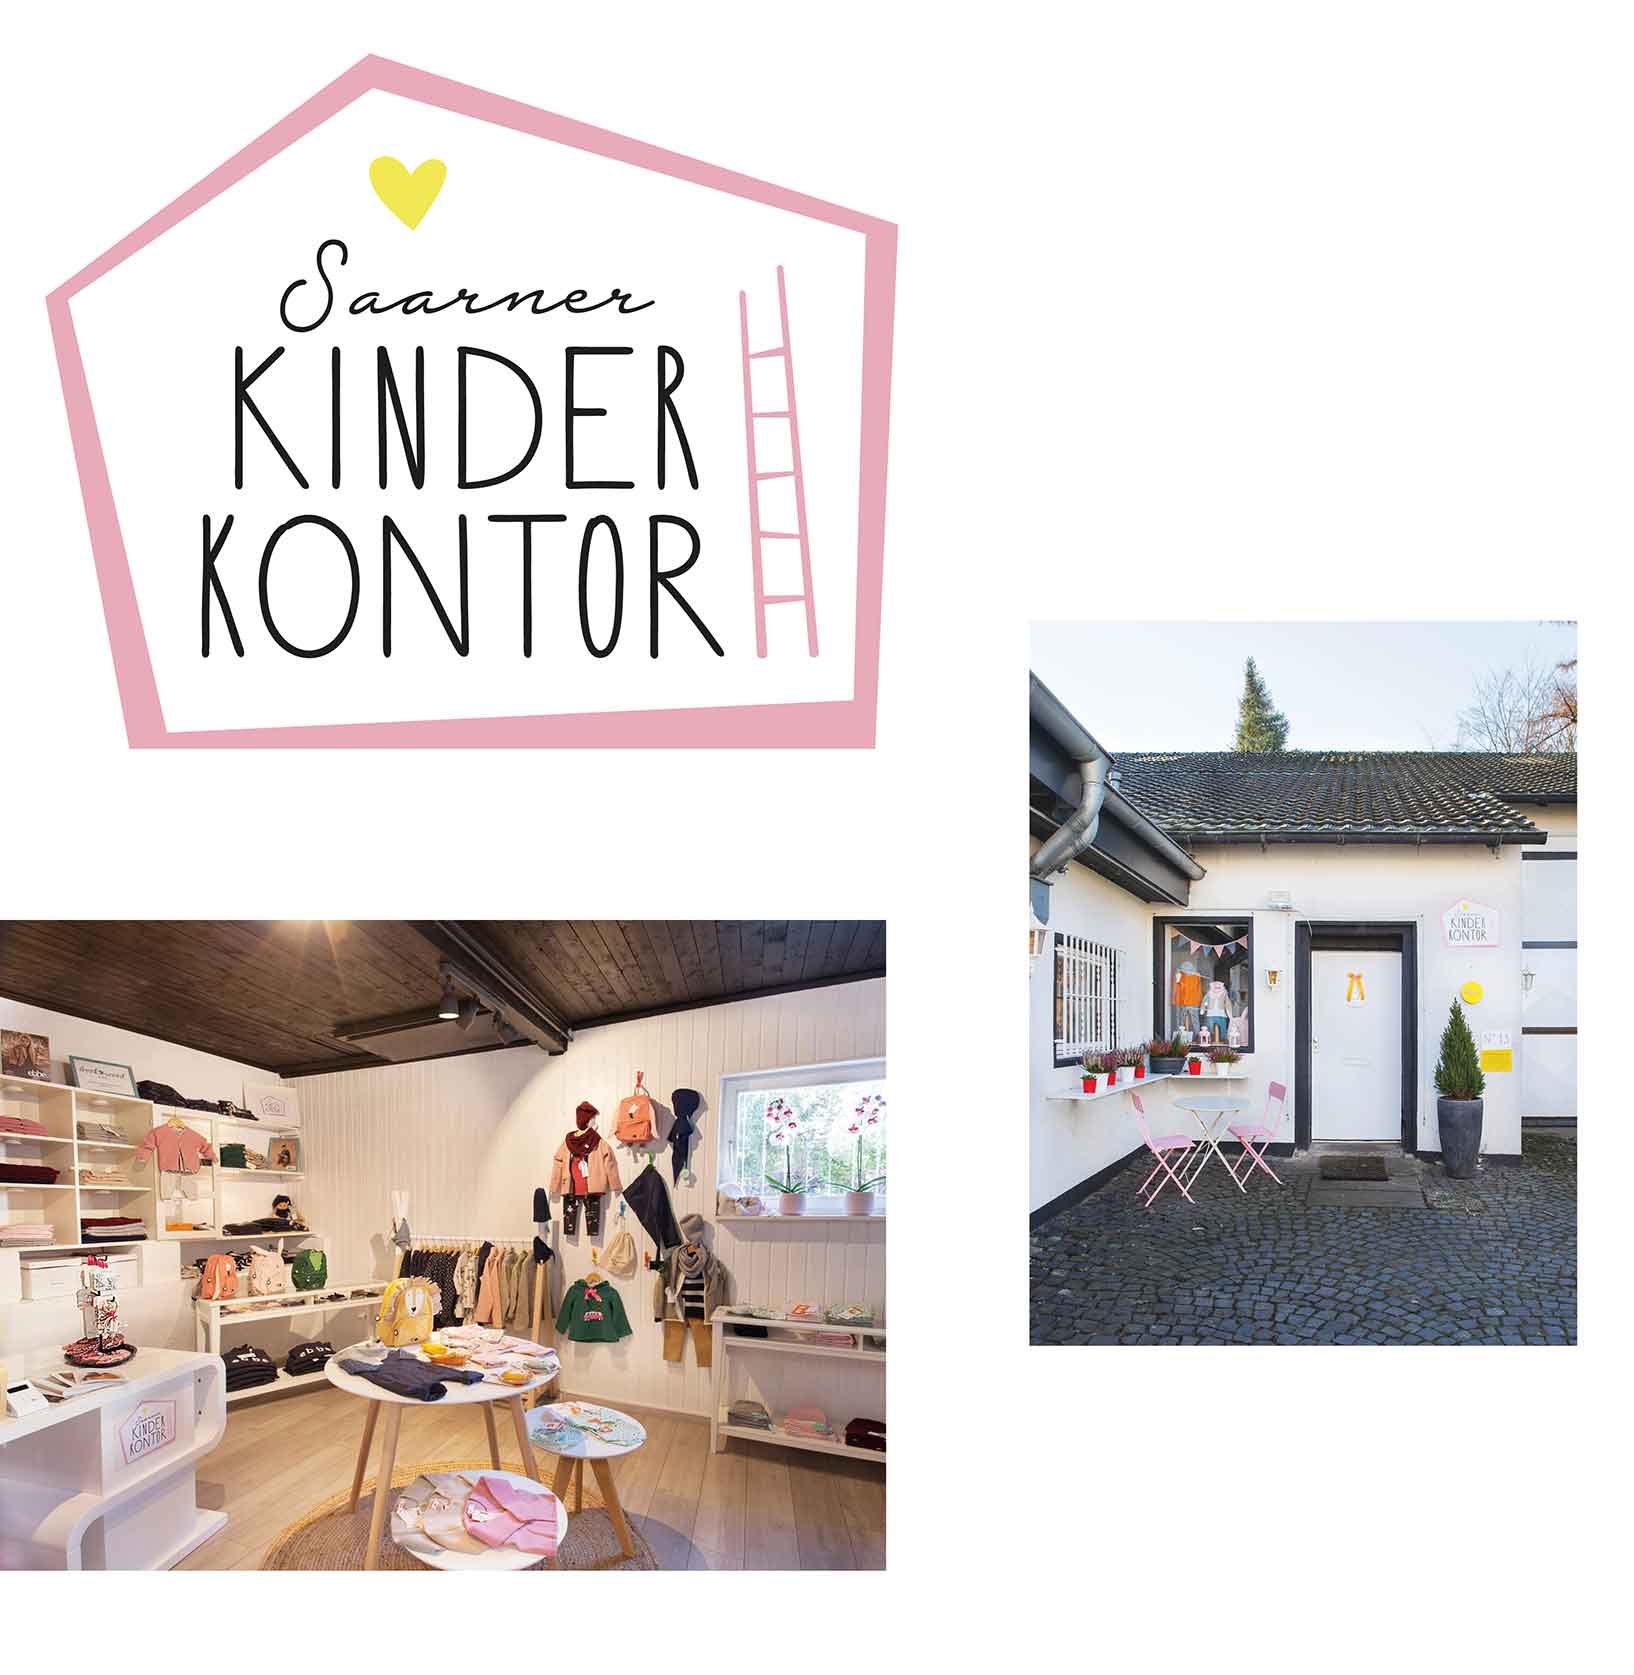 Saarner_Kinderkontor_Corporate-Design